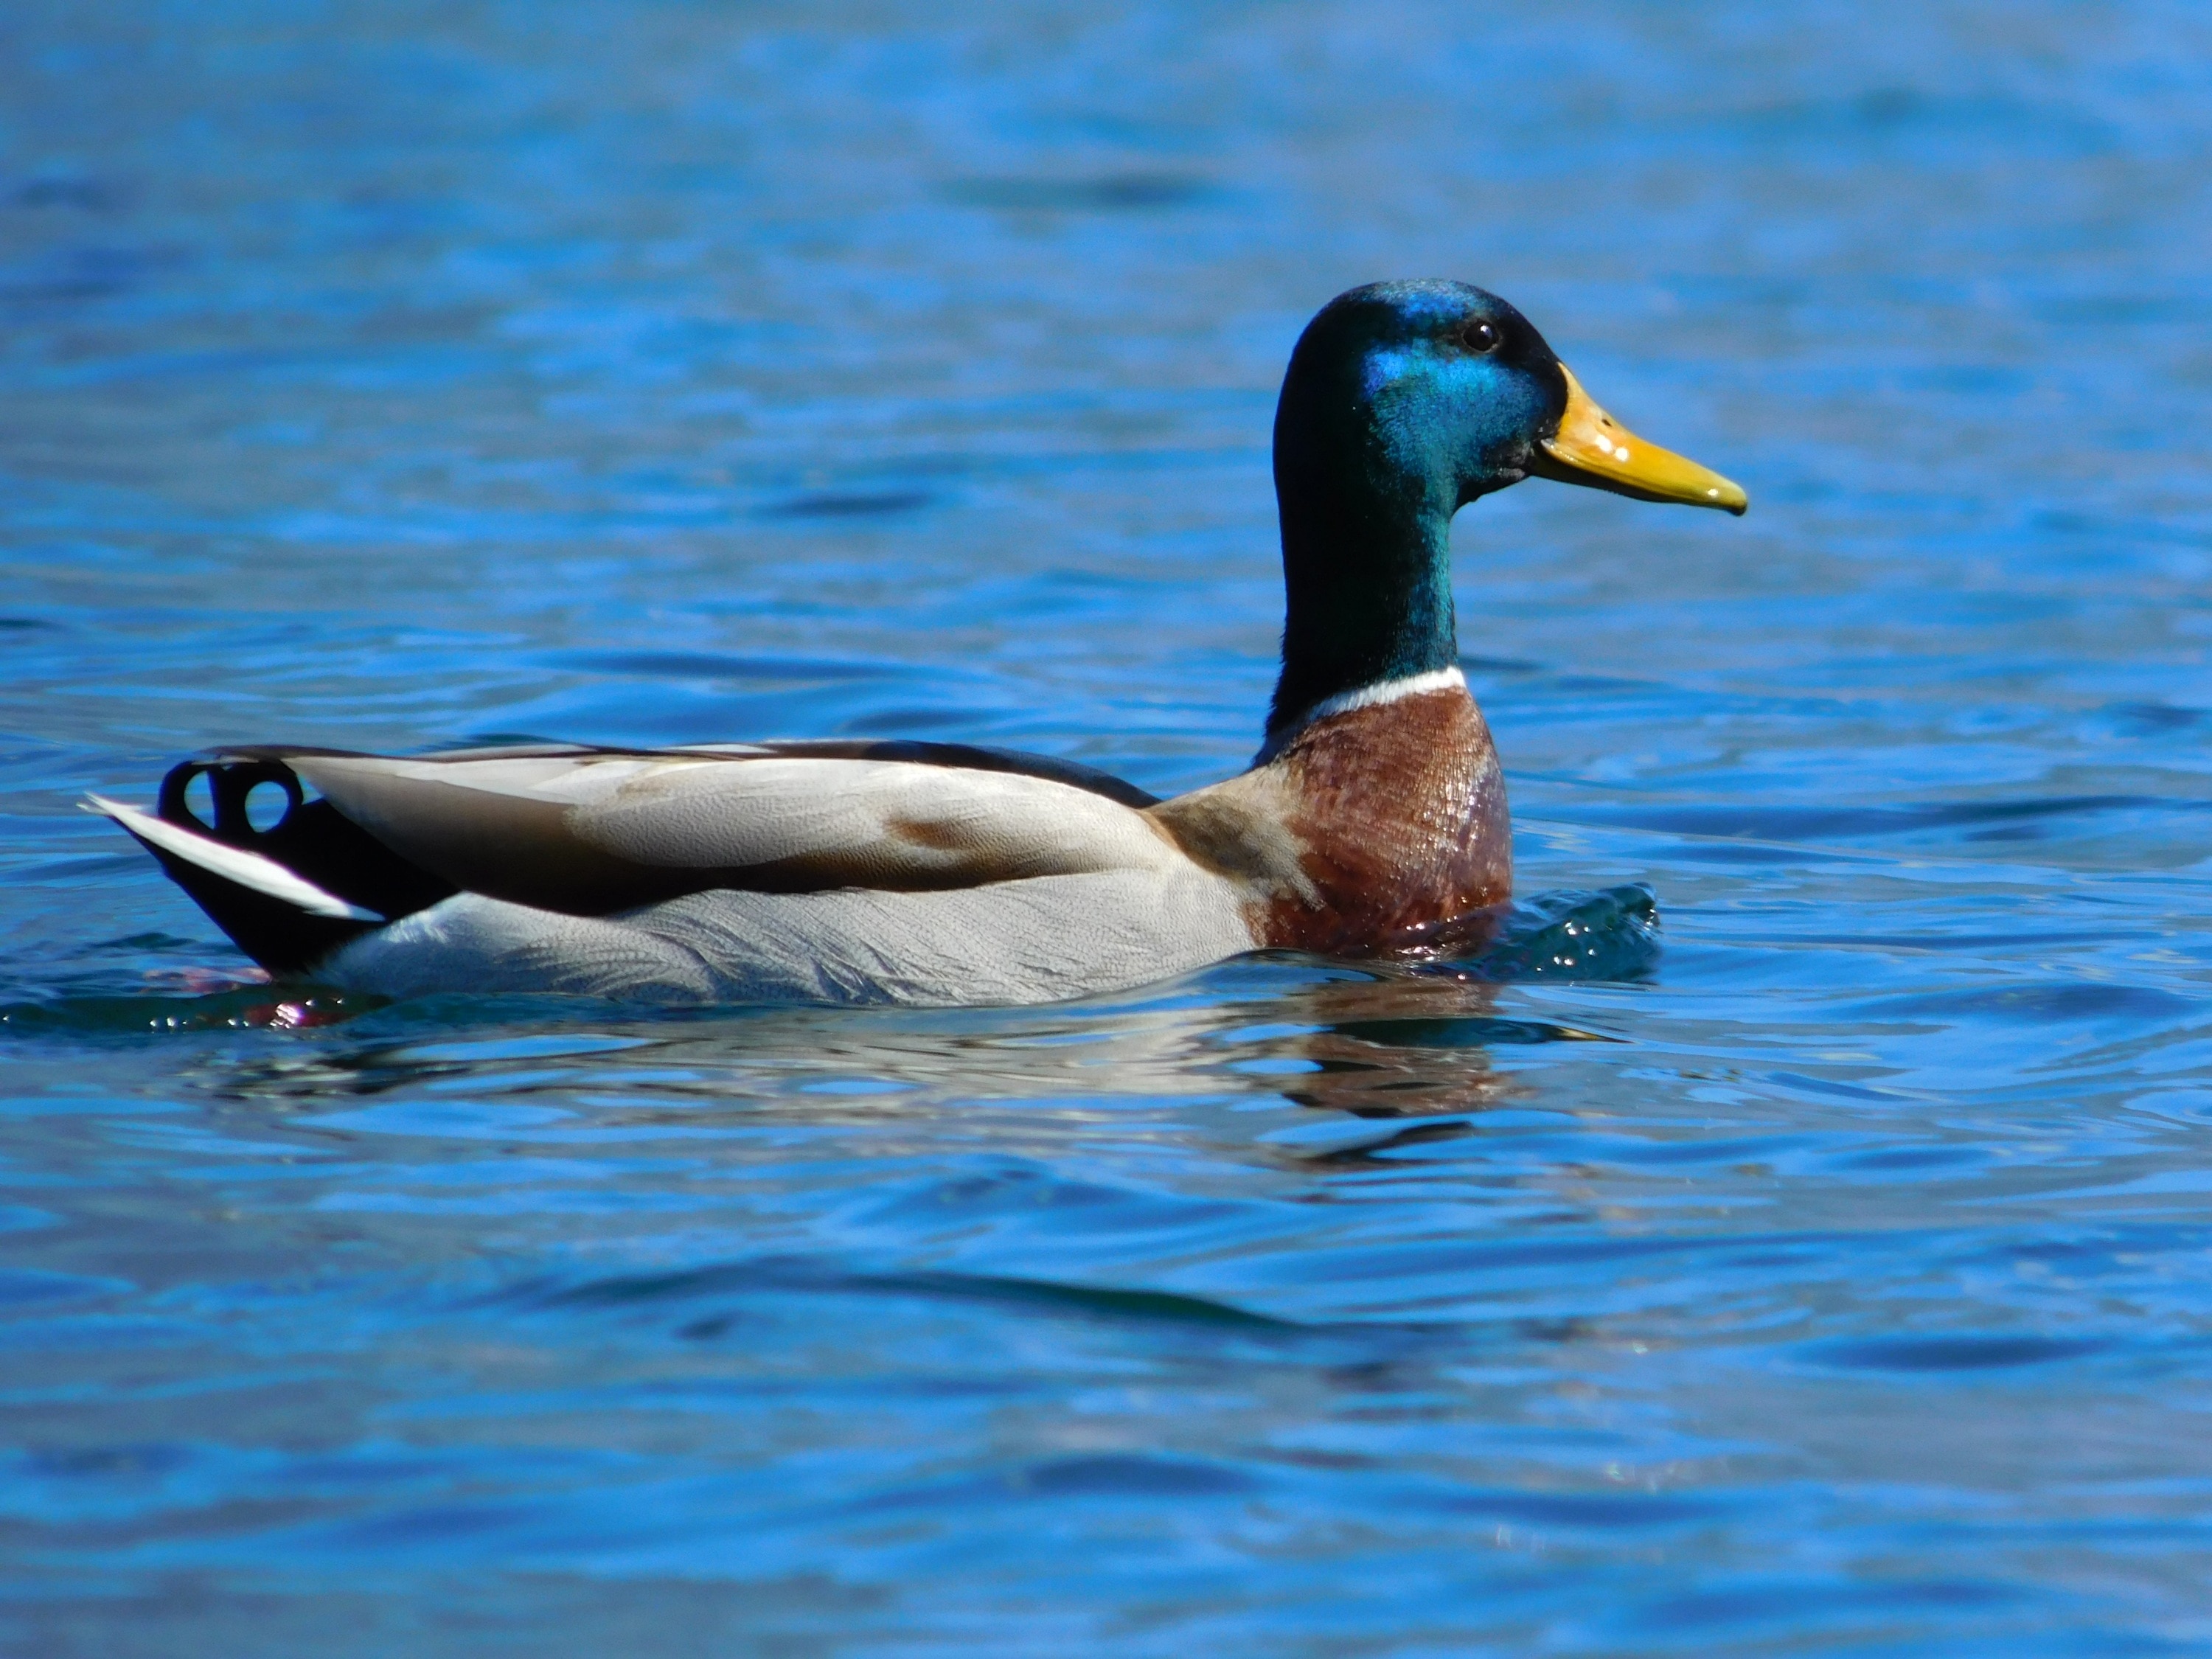 Duck, Water, Mallard, Lake, Colors, animals in the wild, one animal